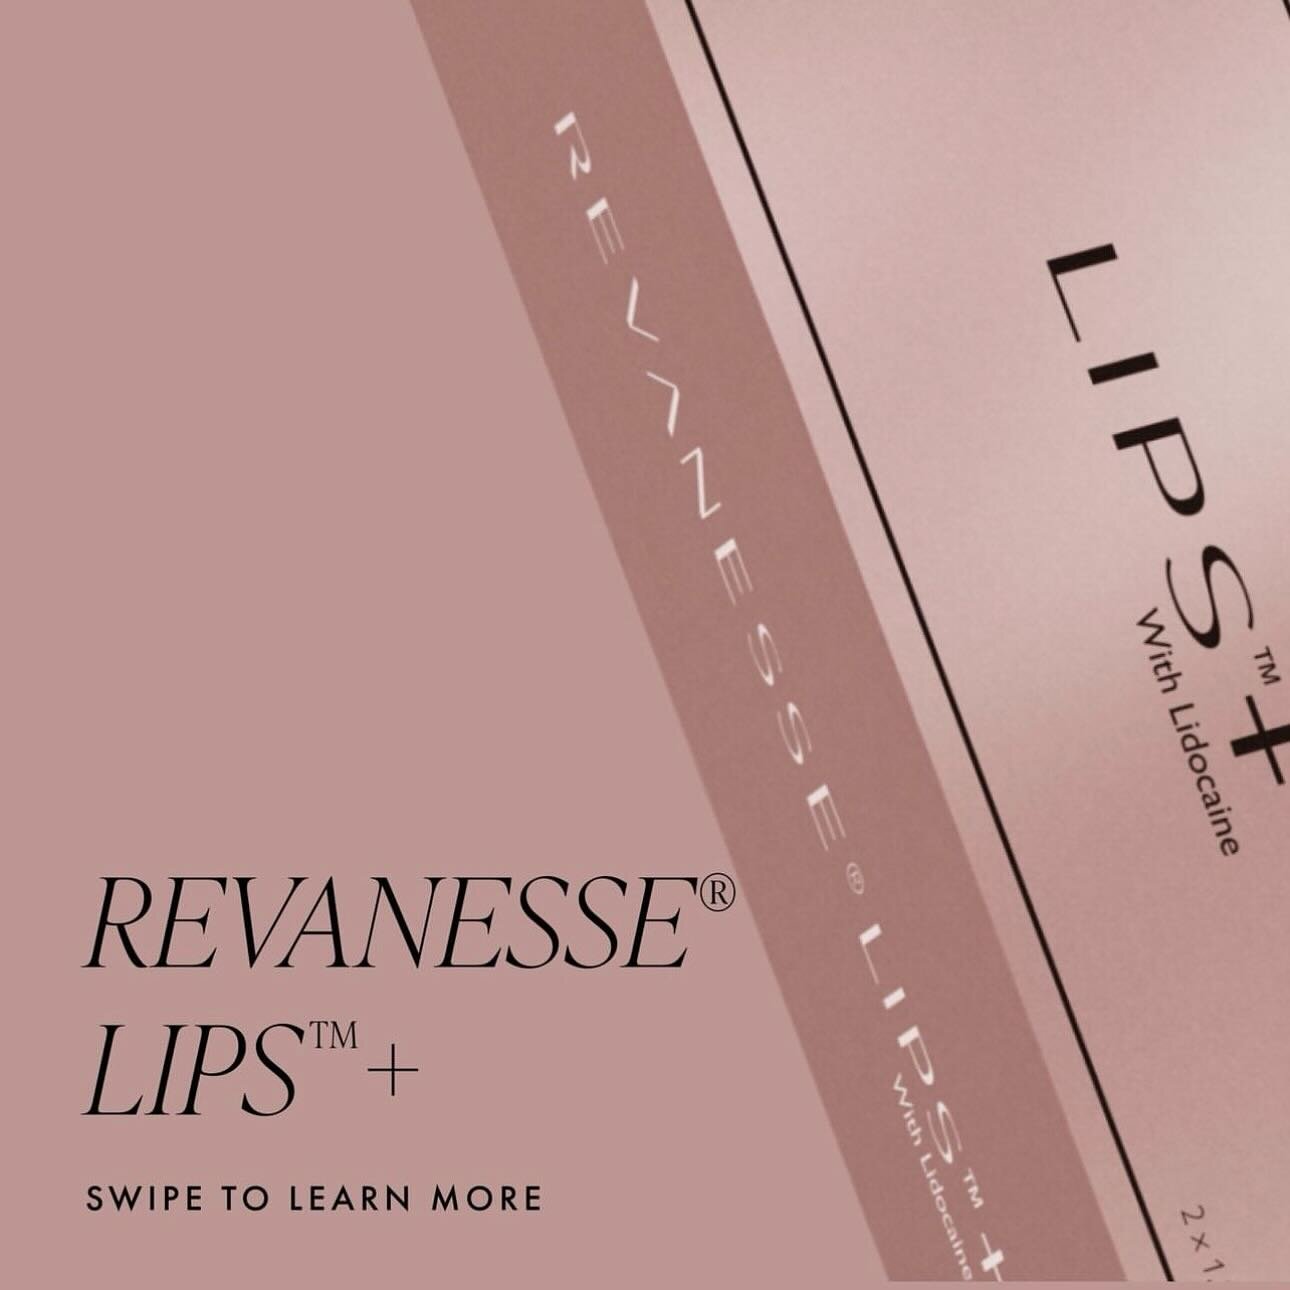 Get your perfect lip enhancement with Revanesse Lips+💋
#Repost from @revanesseusa 

#Revanesse #RevanesseLips #LipFiller #Filler #DermalFiller
#HA #HyaluronicAcid #HAFiller #Injectables #RevanesseLips
#Aesthetics #definedskinspa #grandrapids